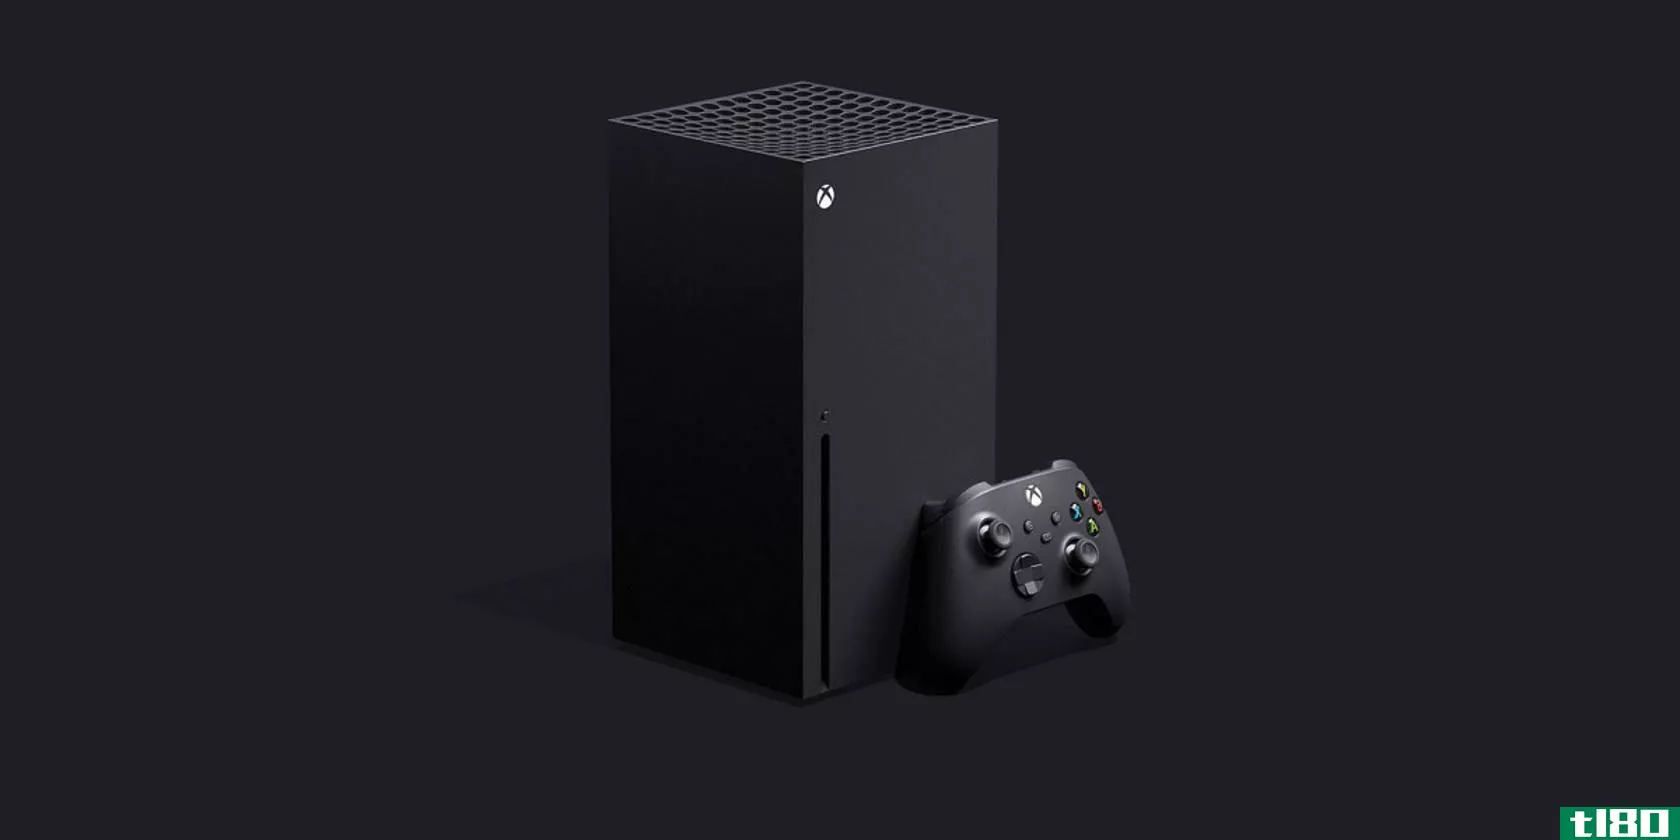 The Xbox Series X c***ole